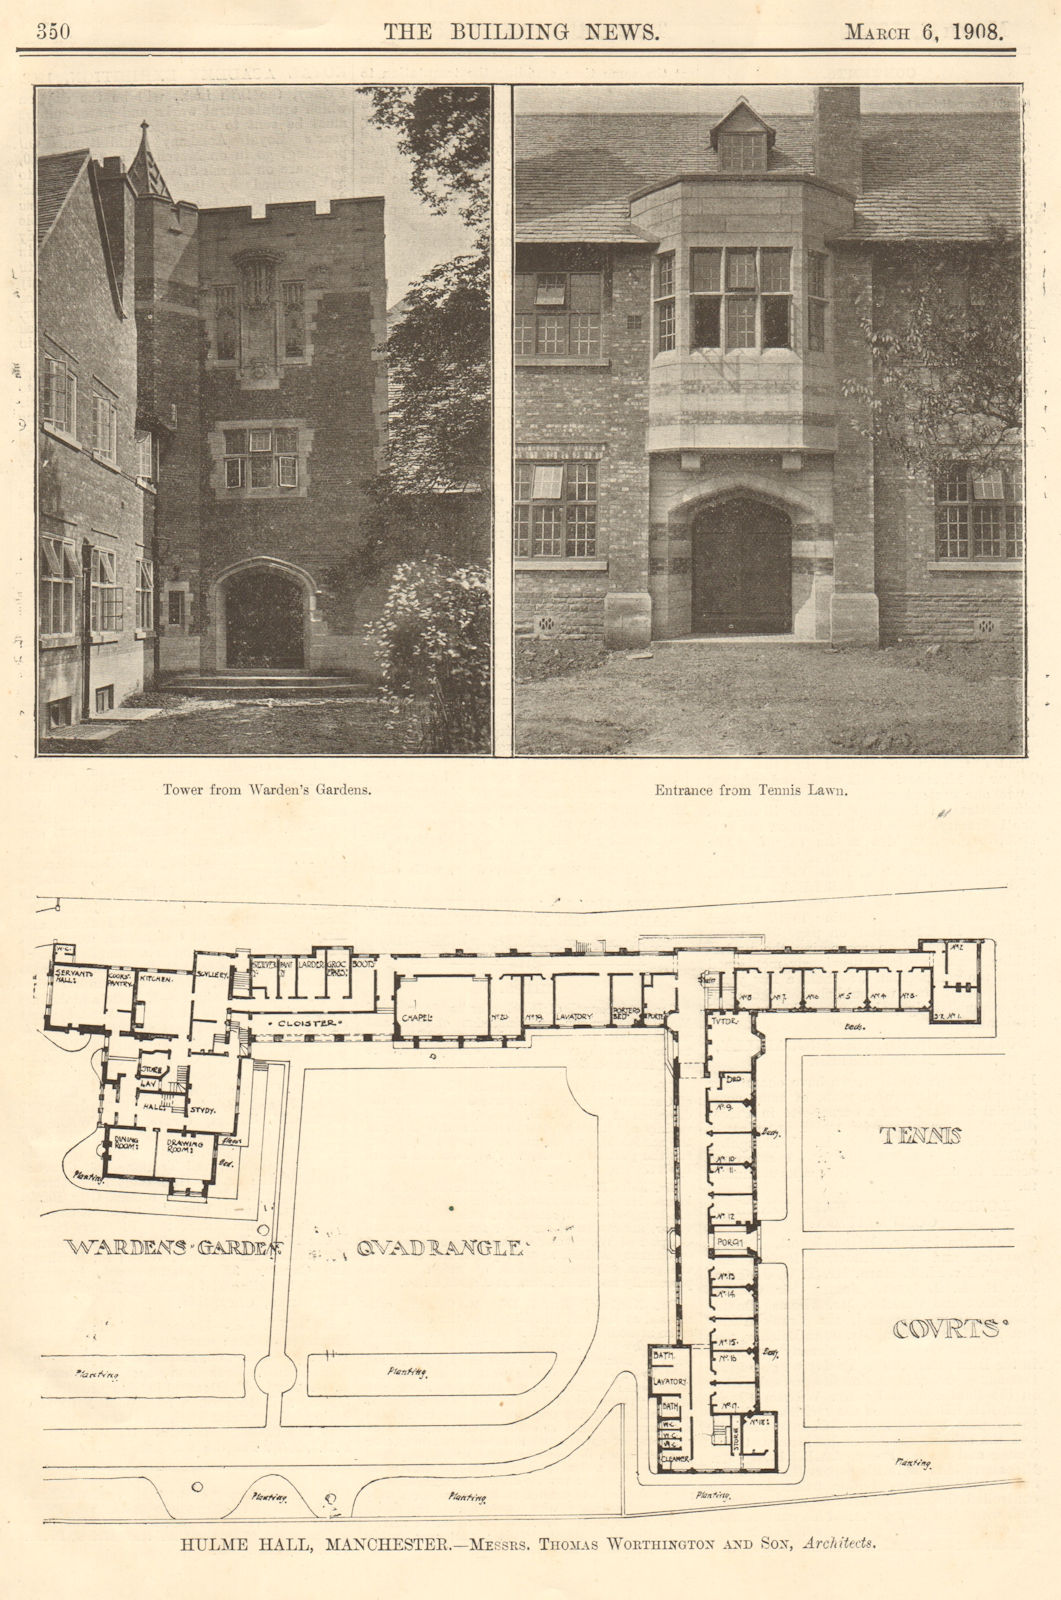 Hulme Hall, Manchester. Thomas Worthington Architect. Tower Warden's garden 1908